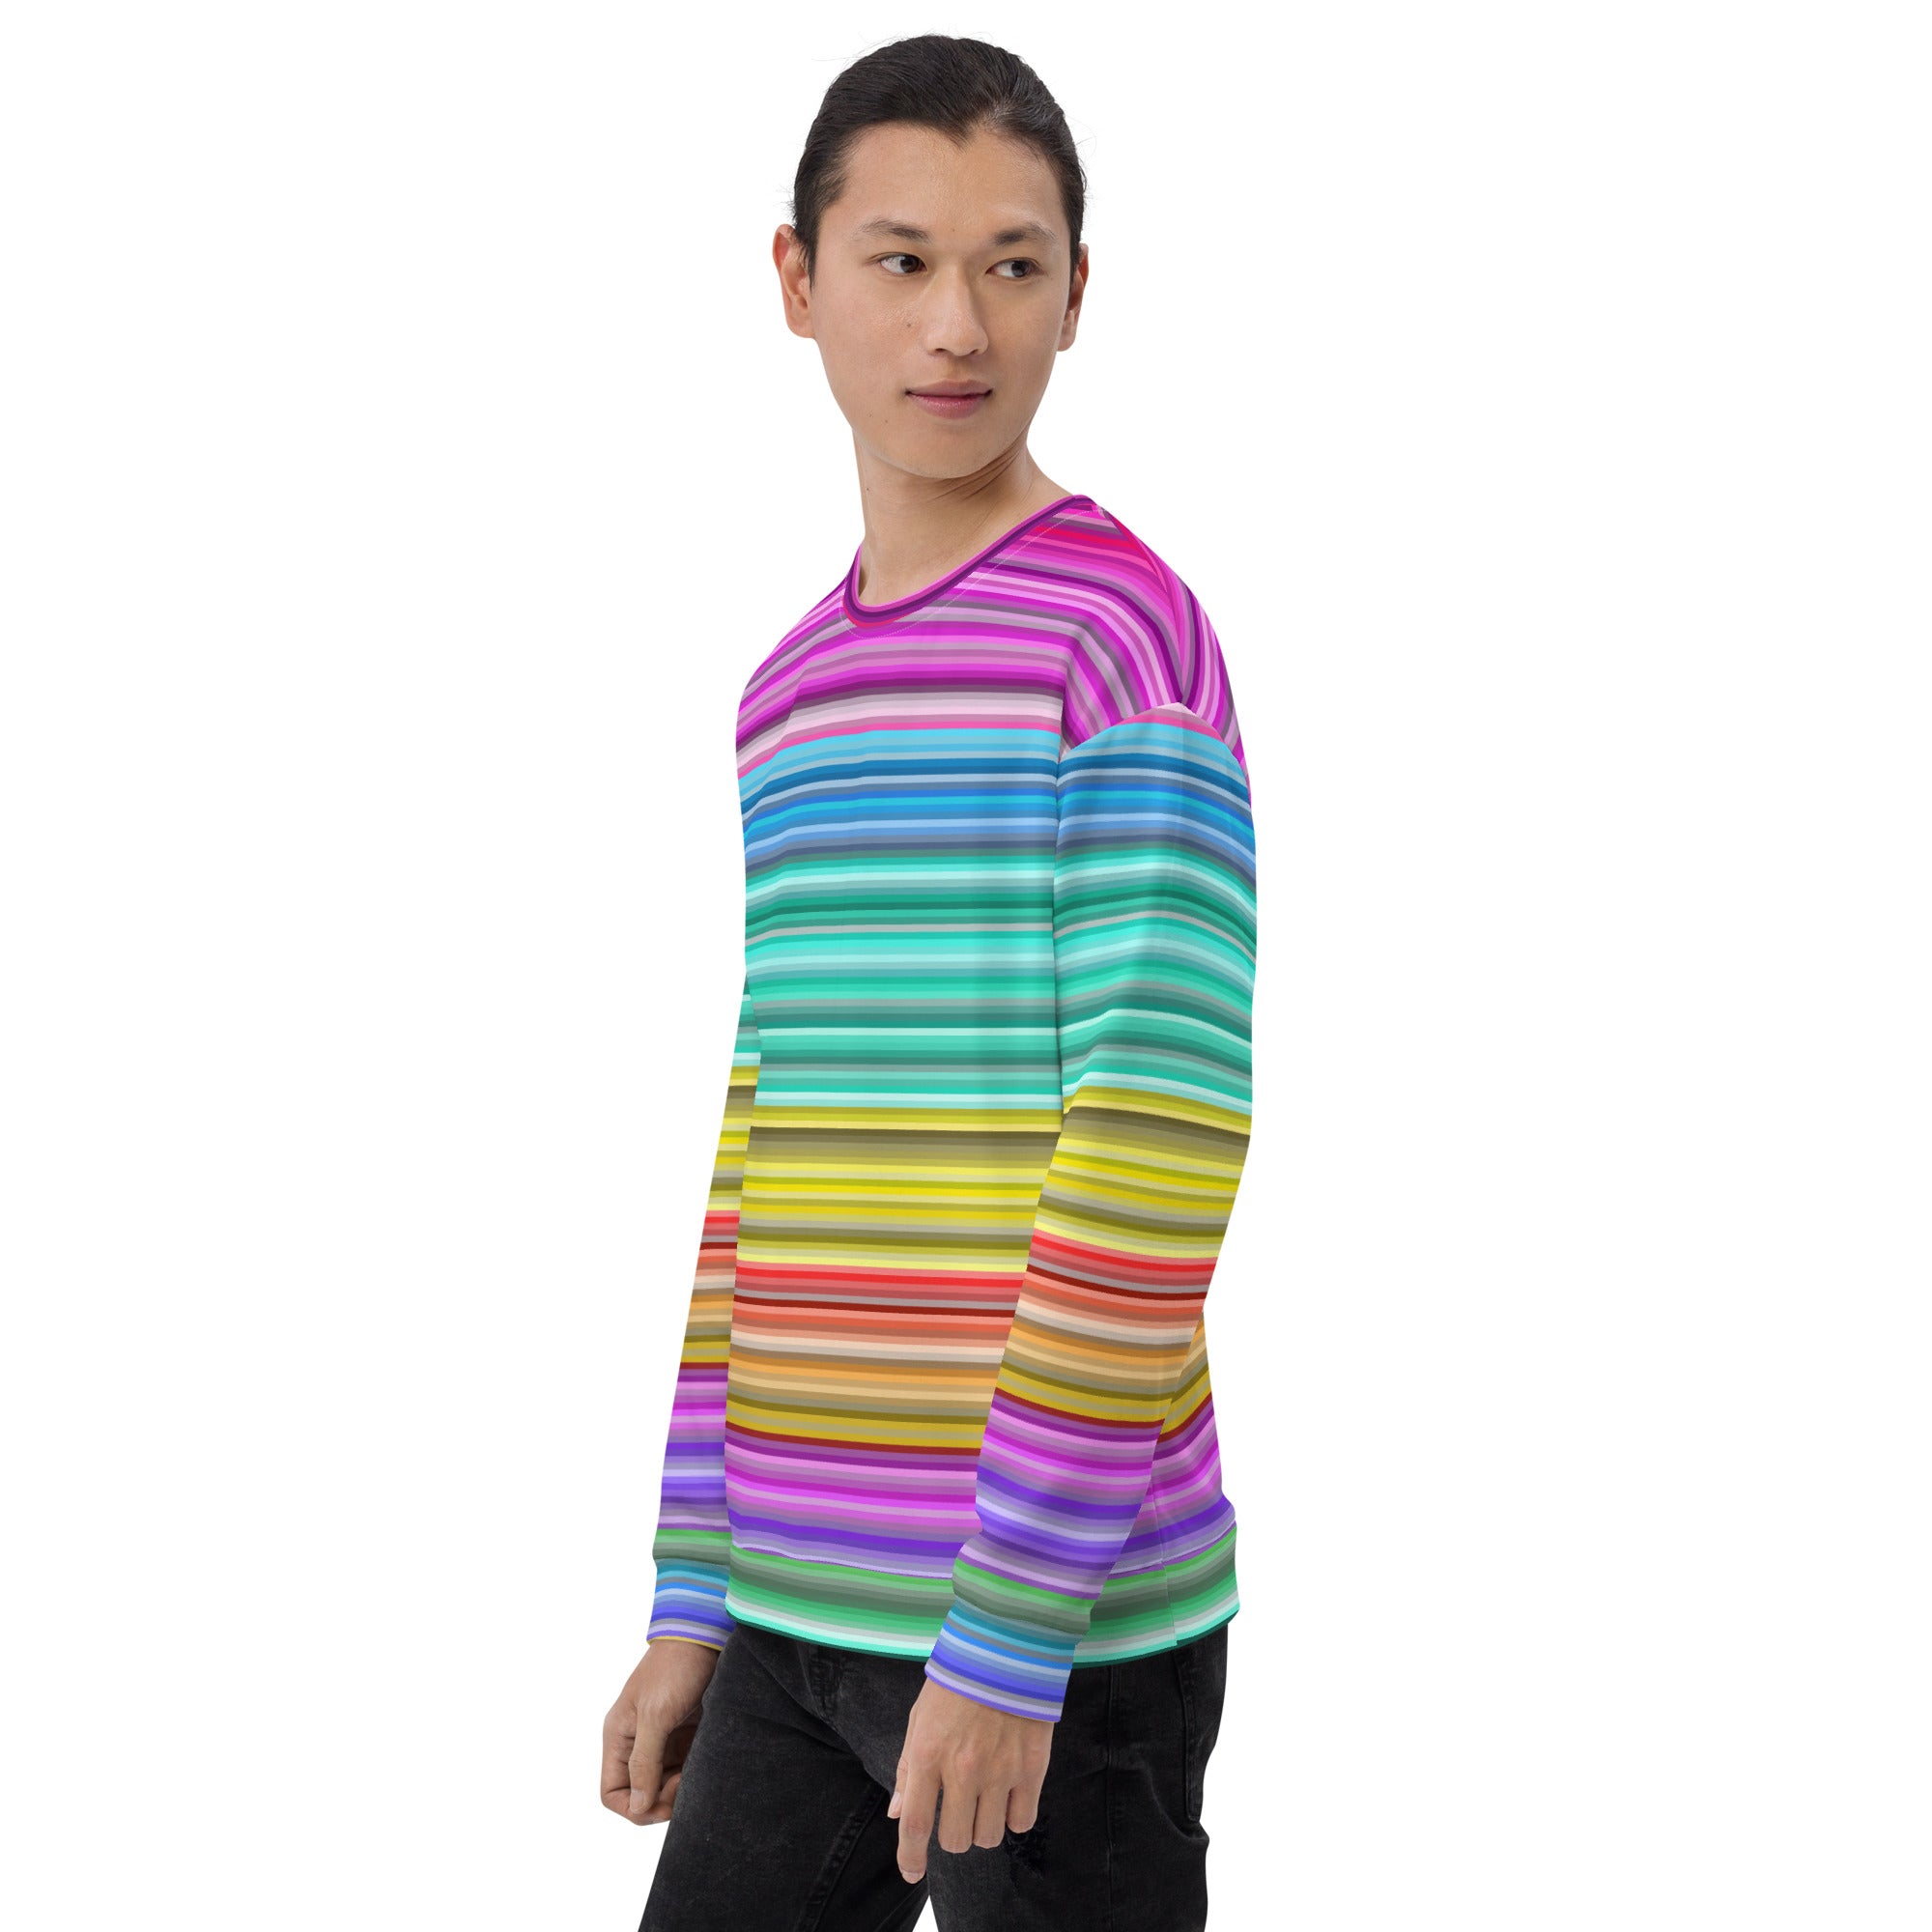 Colour Gradient Unisex Sweatshirt